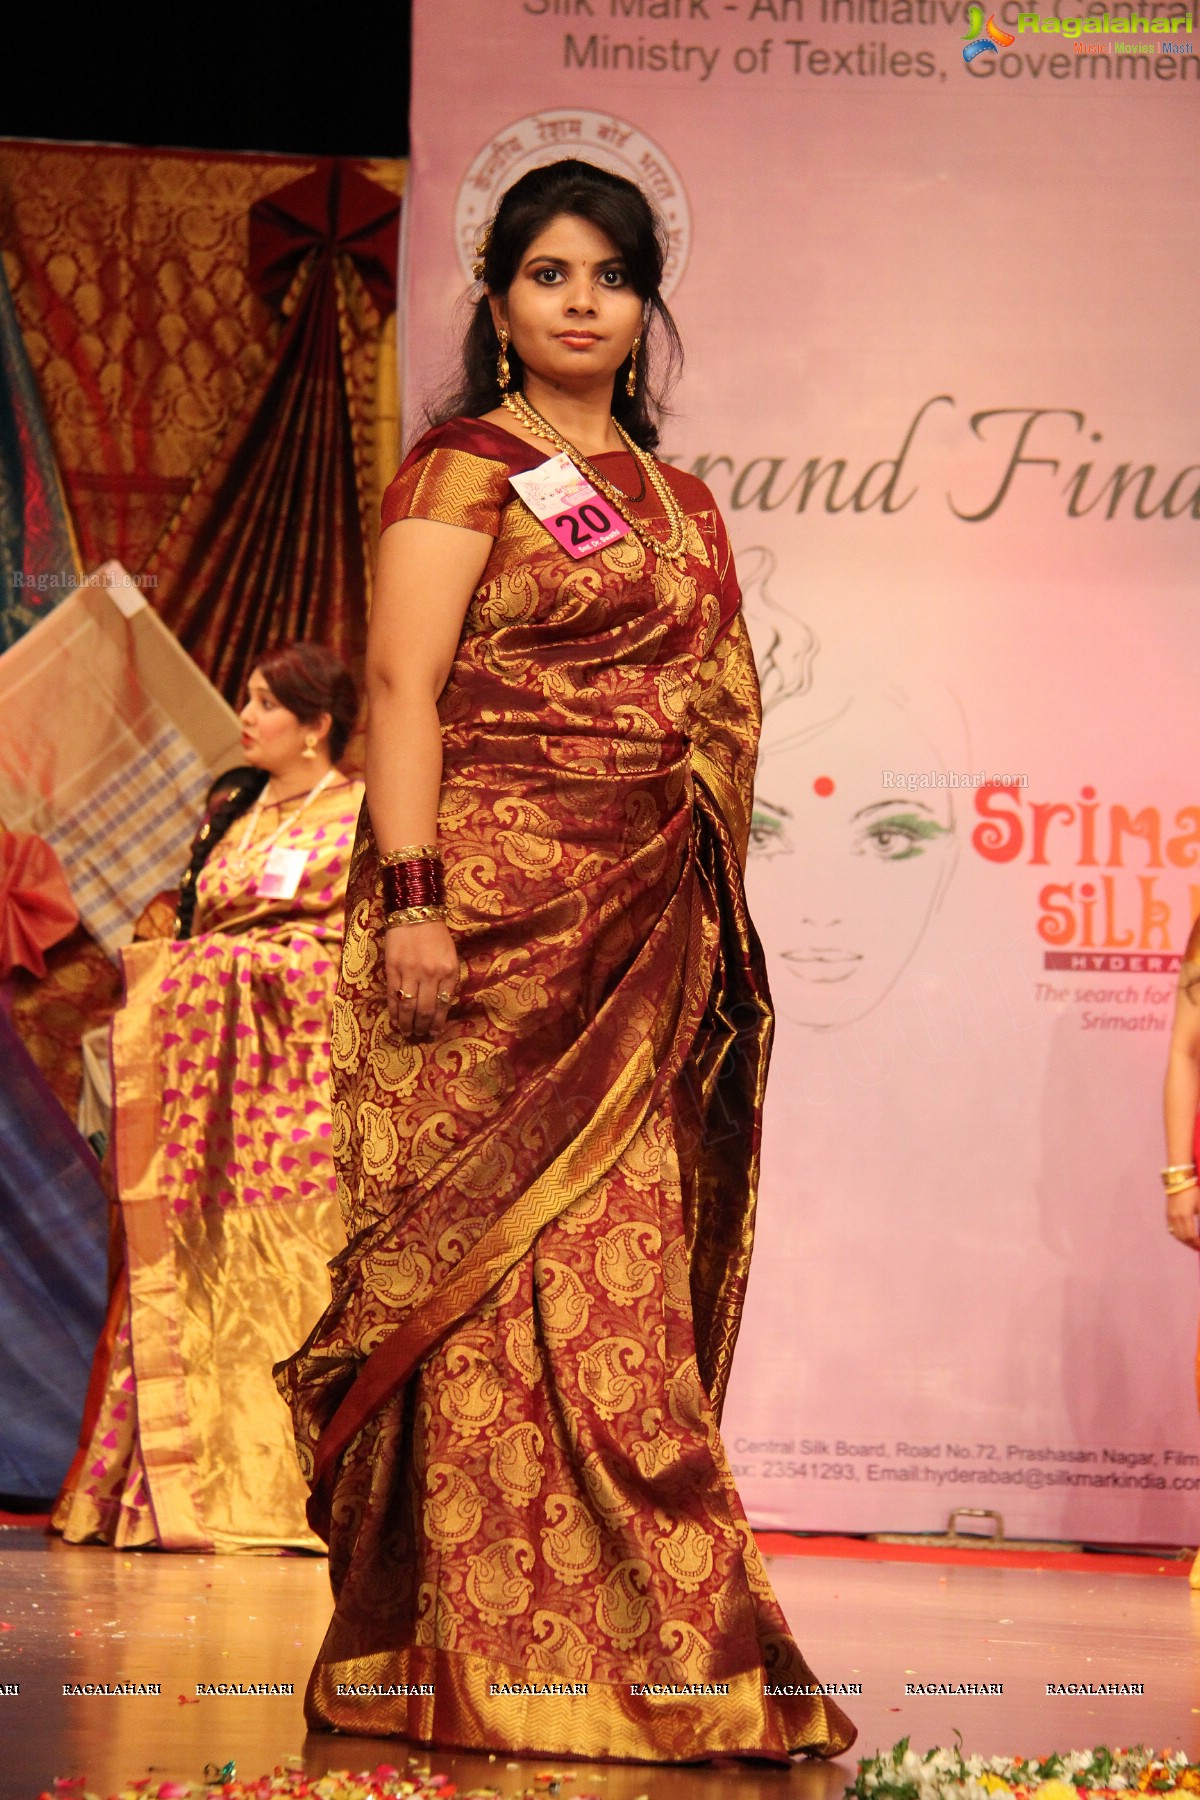 Srimathi Silk Mark Hyderabad 2013 Grand Finale